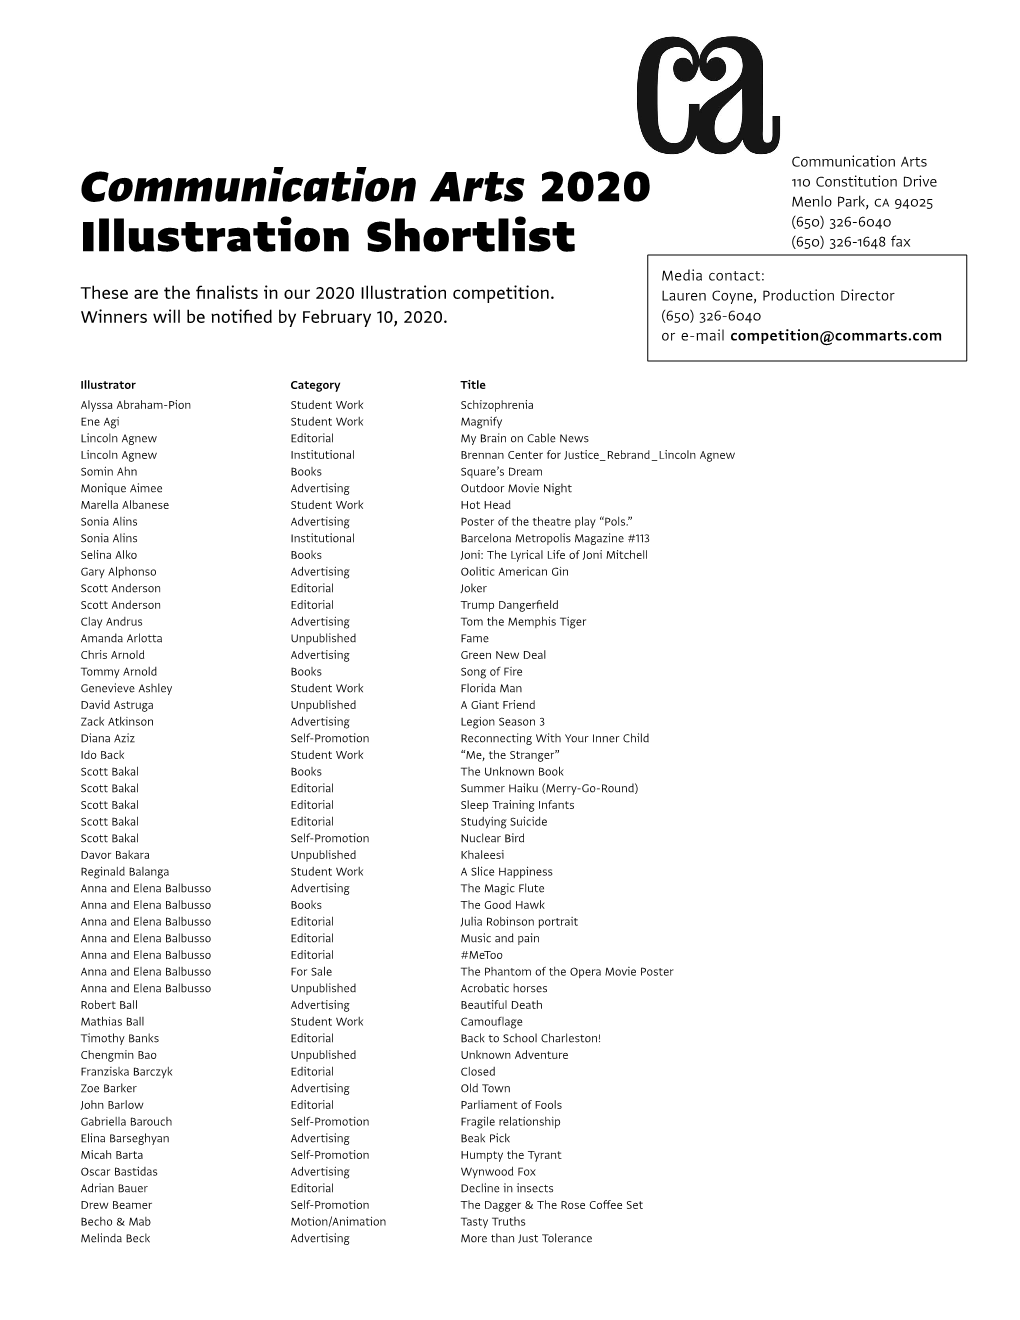 Communication Arts 2020 Illustration Shortlist